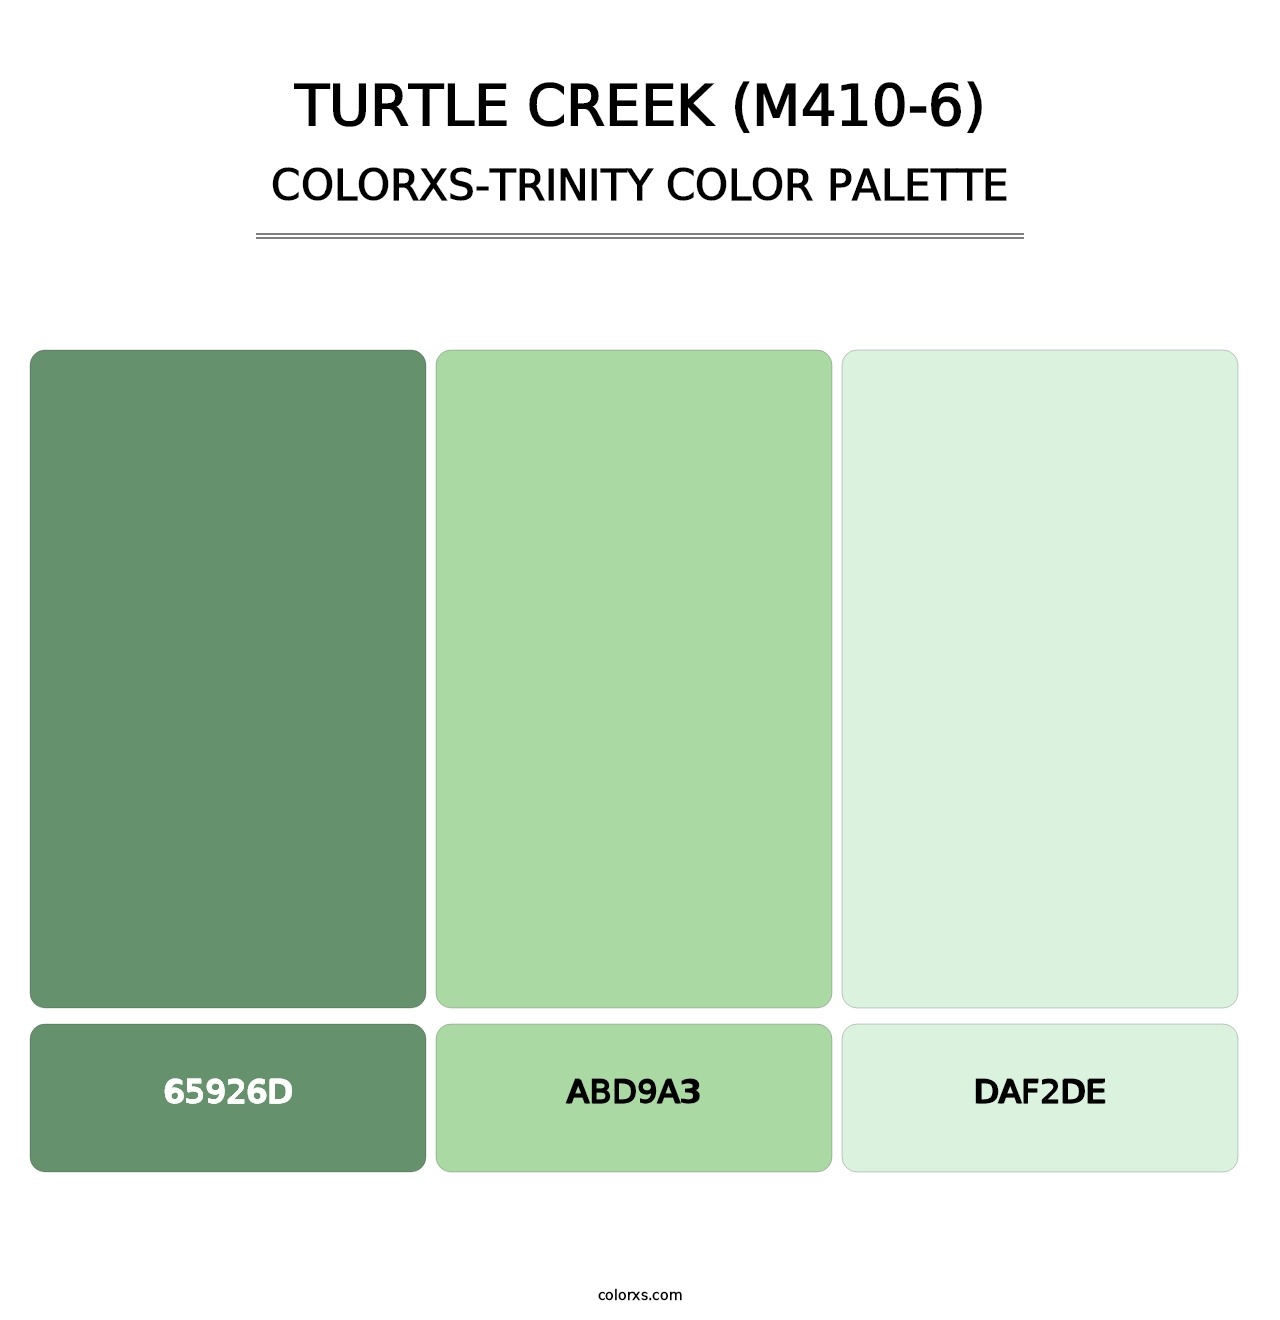 Turtle Creek (M410-6) - Colorxs Trinity Palette